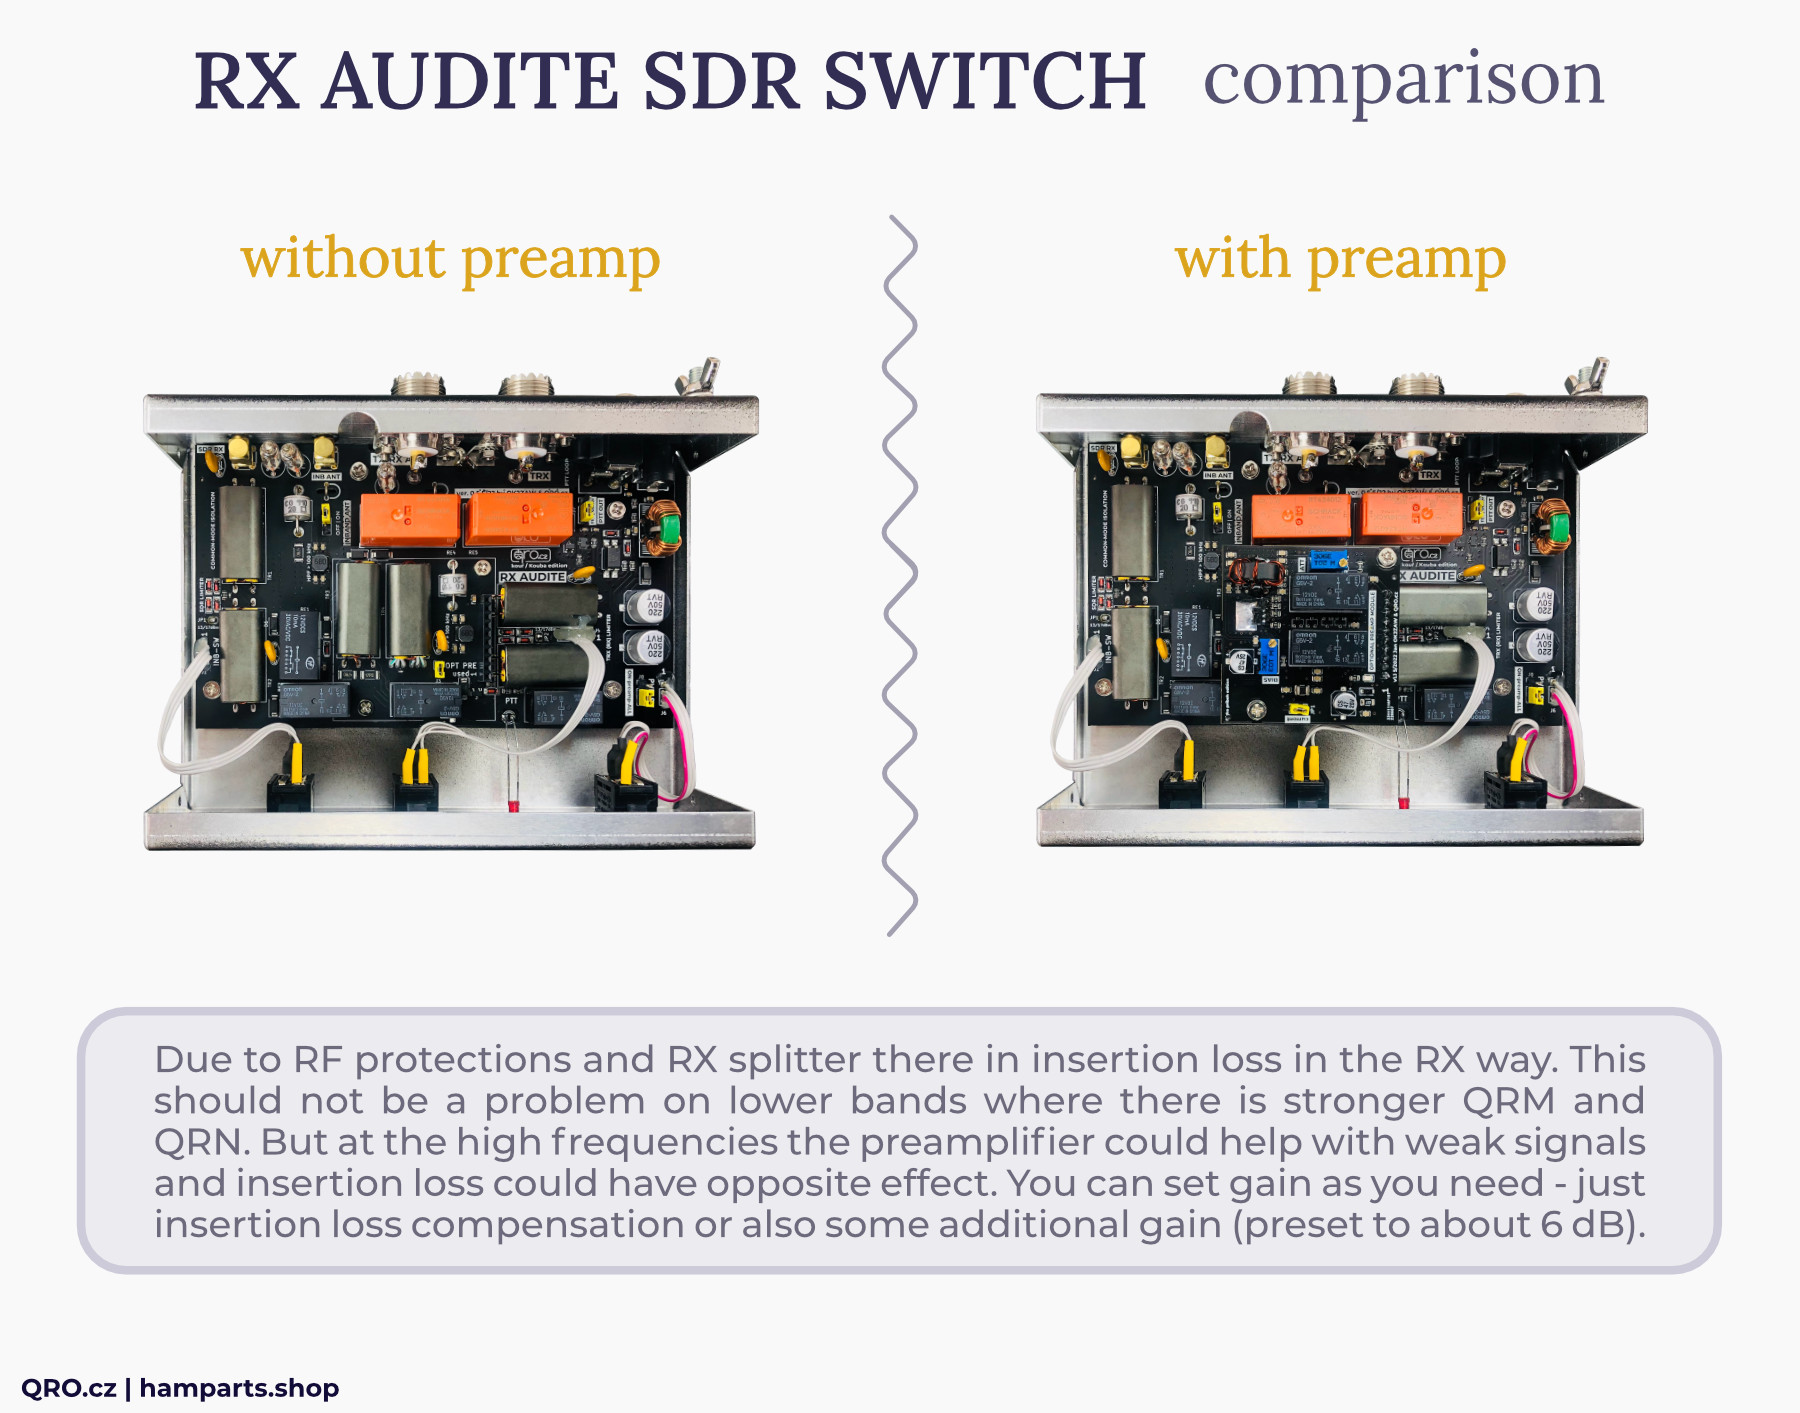 rx audite comparison of the two version by qro.cz hamparts.shop